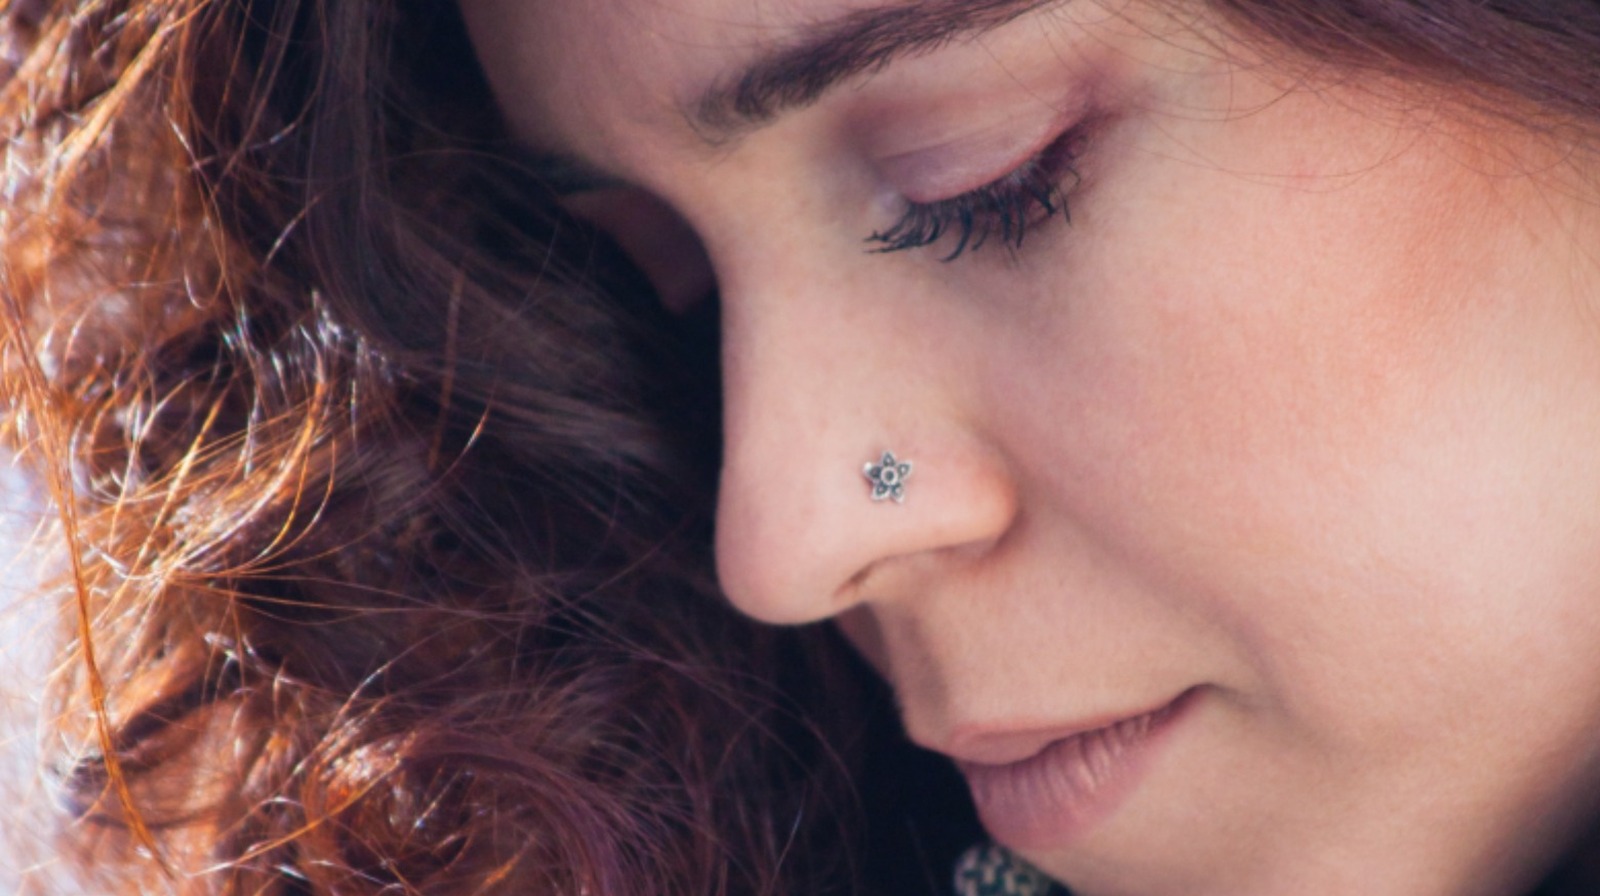 Chrissy Teigen Shows Nose Ring Piercing On Instagram